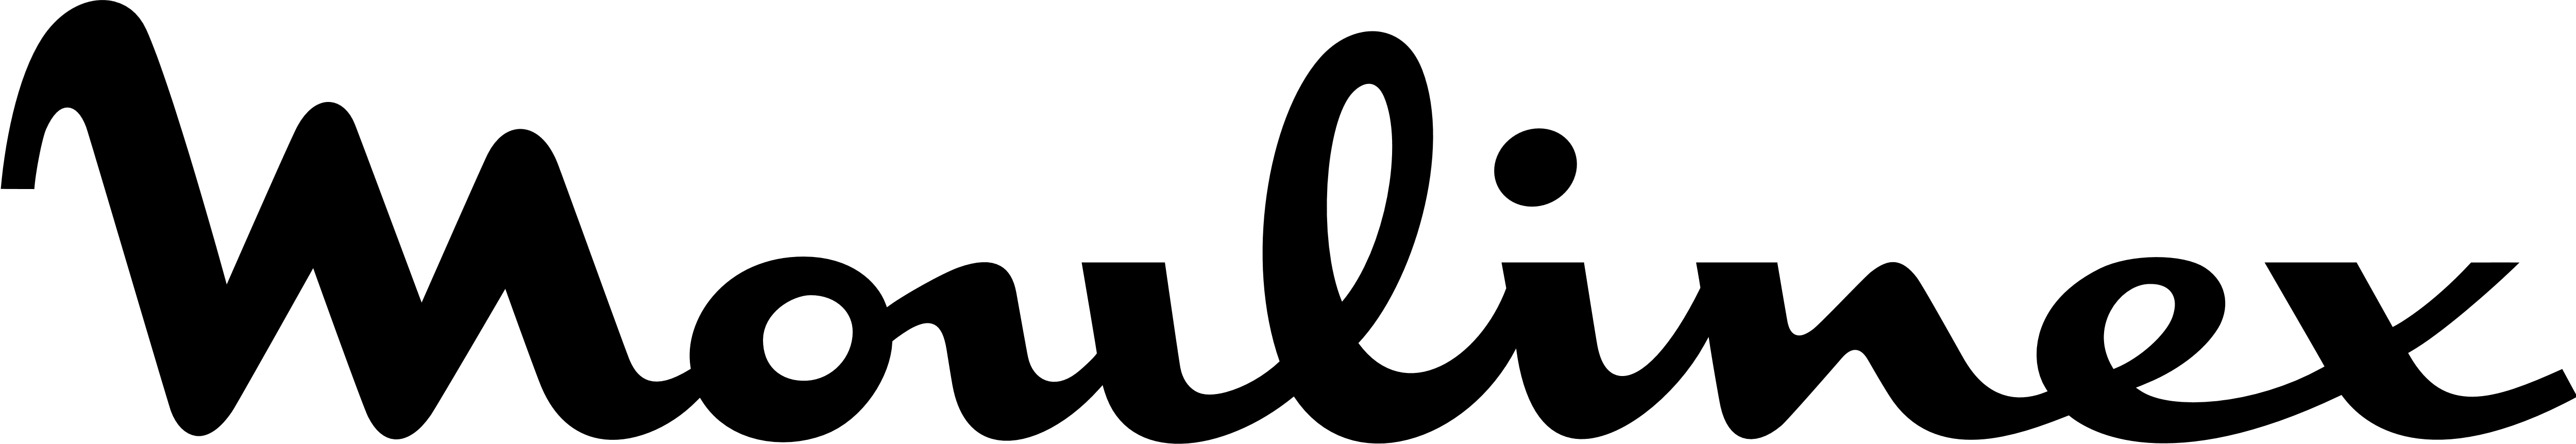 Moulinex png. Moulinex логотип. Милинекс лого. Мулинекс надпись. Moulinex логотип бытовой техники.